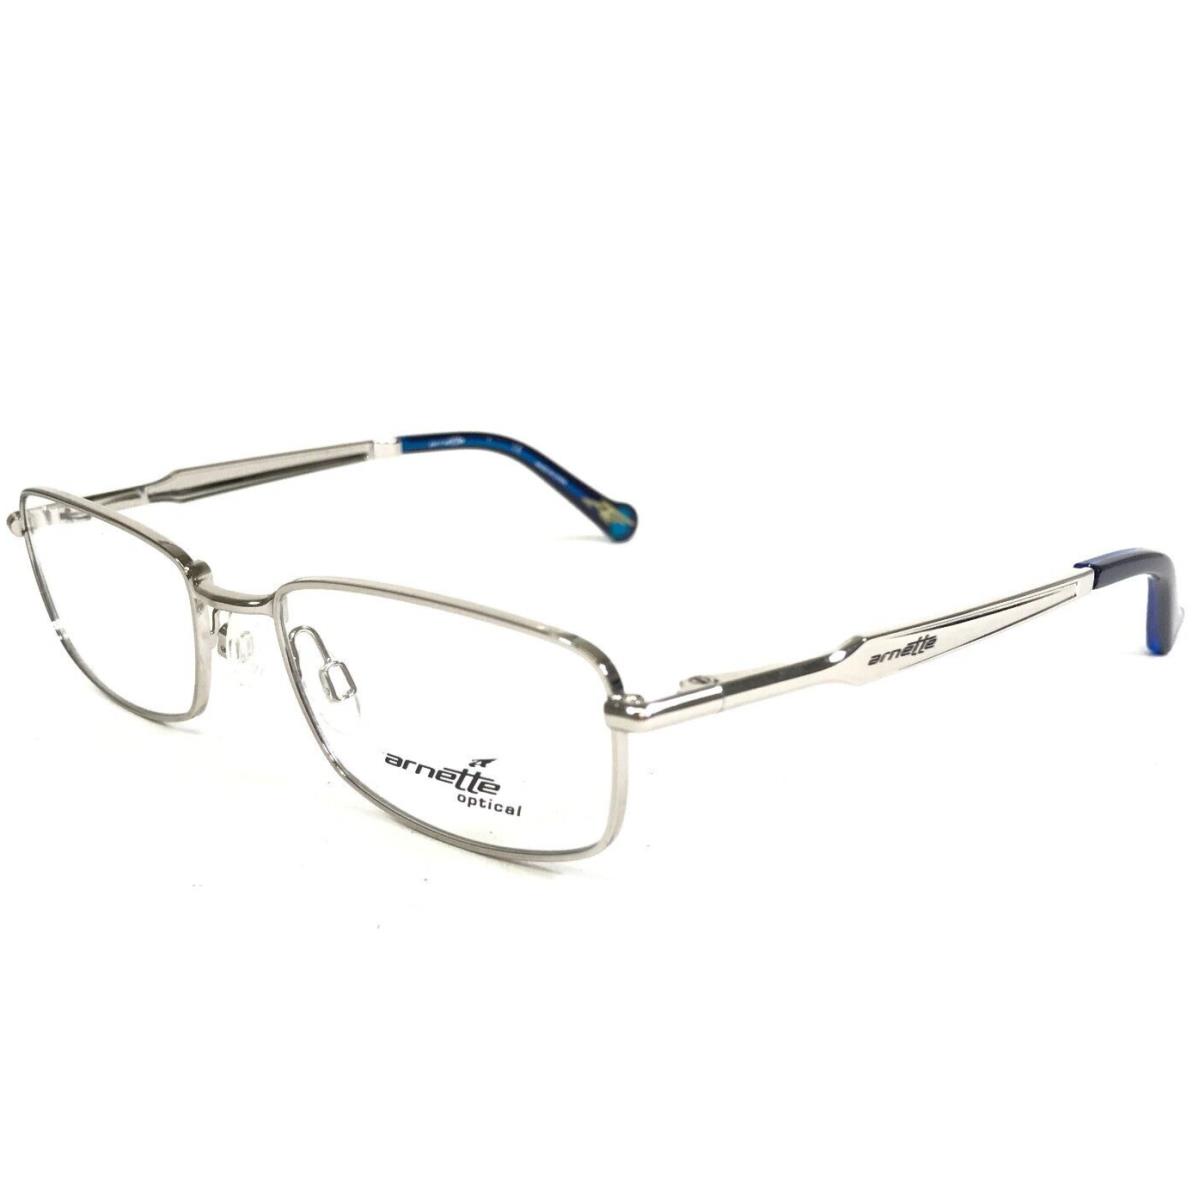 Arnette Small Eyeglasses Frames MOD.6083 507 Silver Wire Rim Square 49-17-135 - Frame: Silver